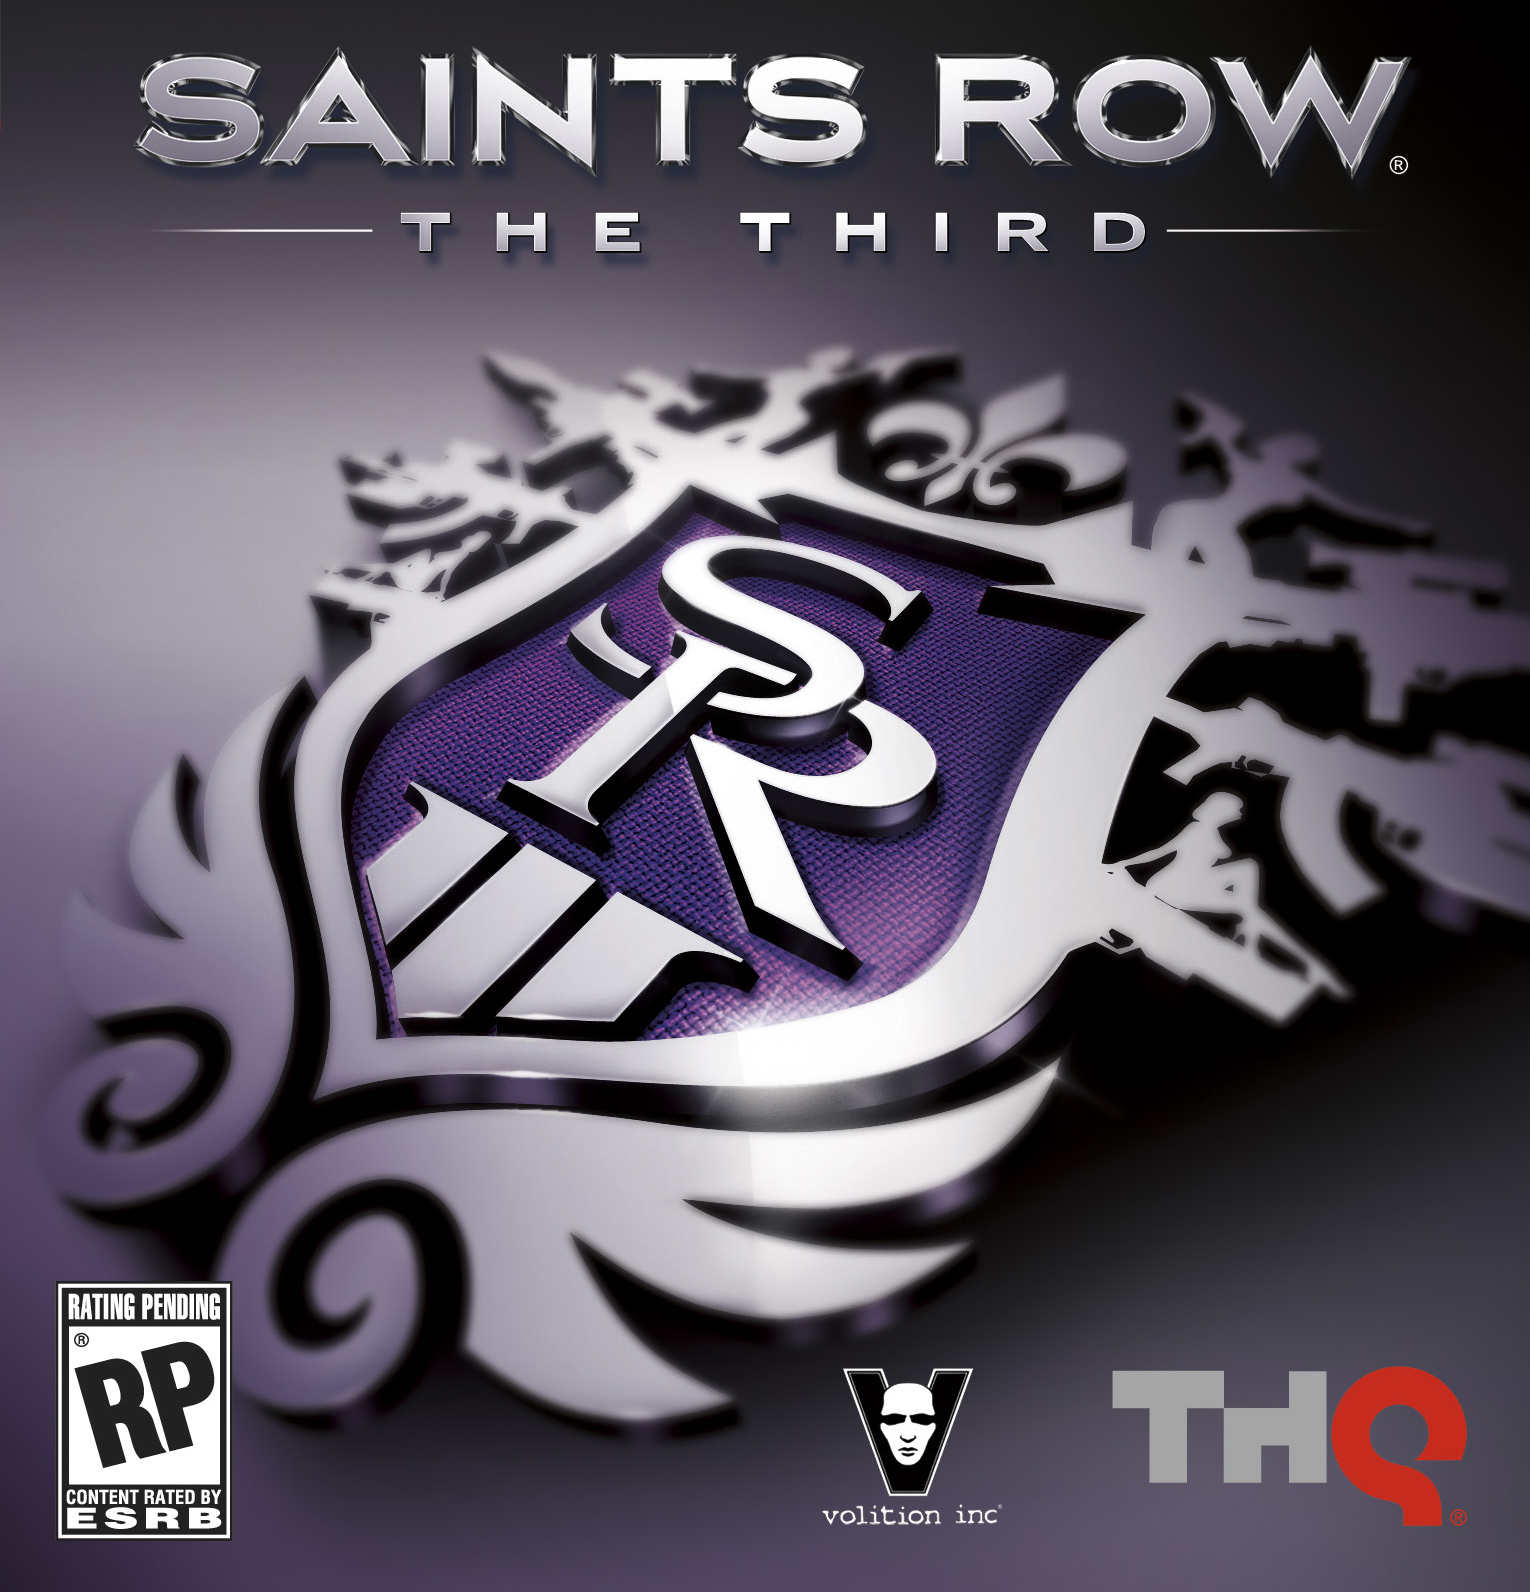 Saints Row's Cancelled PS3 Port 